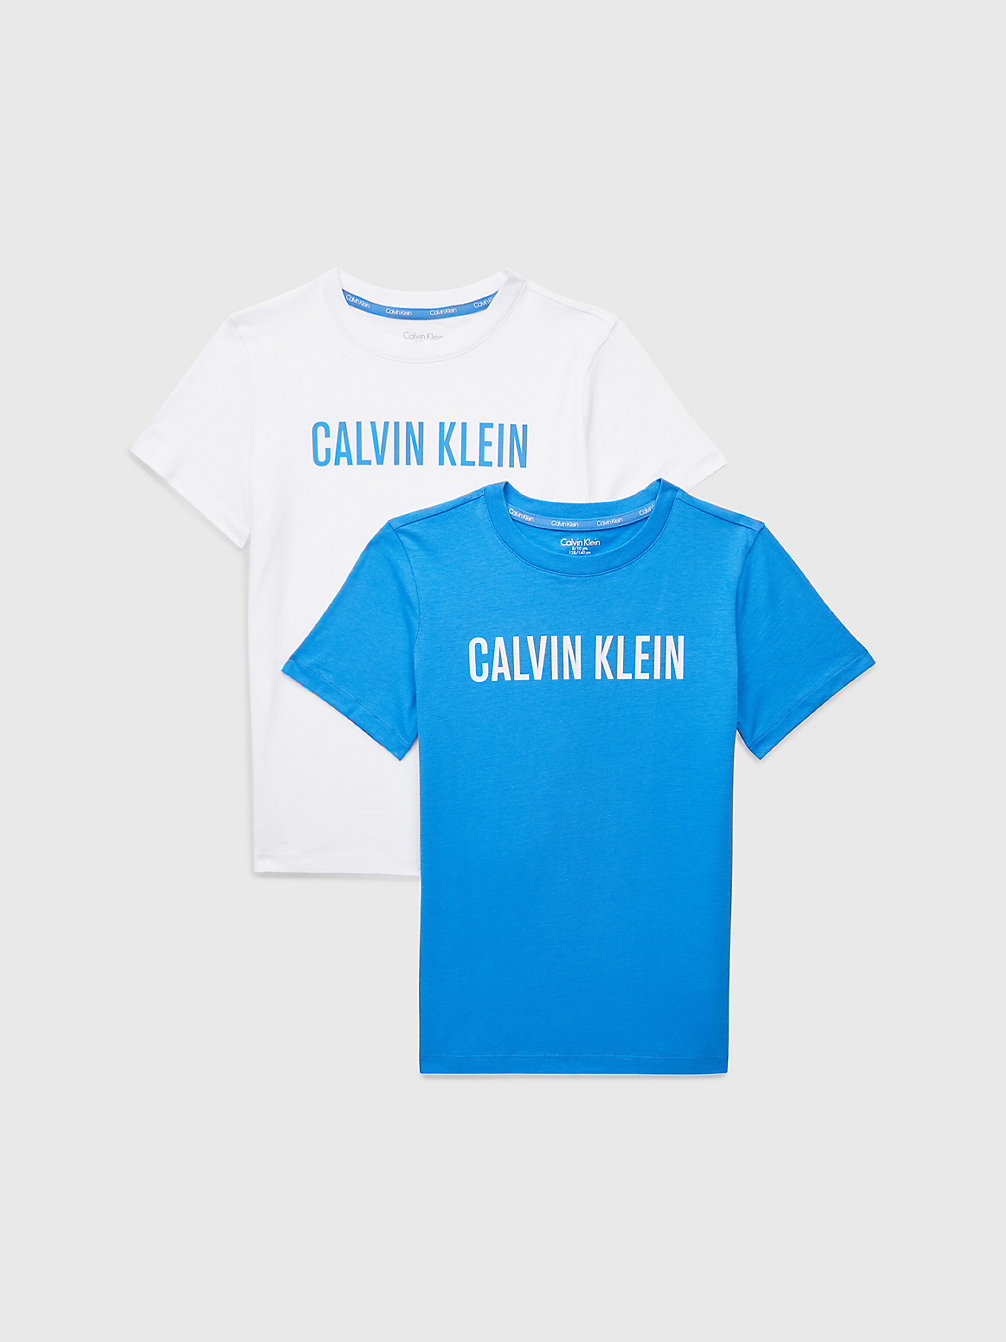 ELECTRICAQUA/PVHWHITE > 2er-Pack Jungen-T-Shirts – Intense Power > undefined boys - Calvin Klein